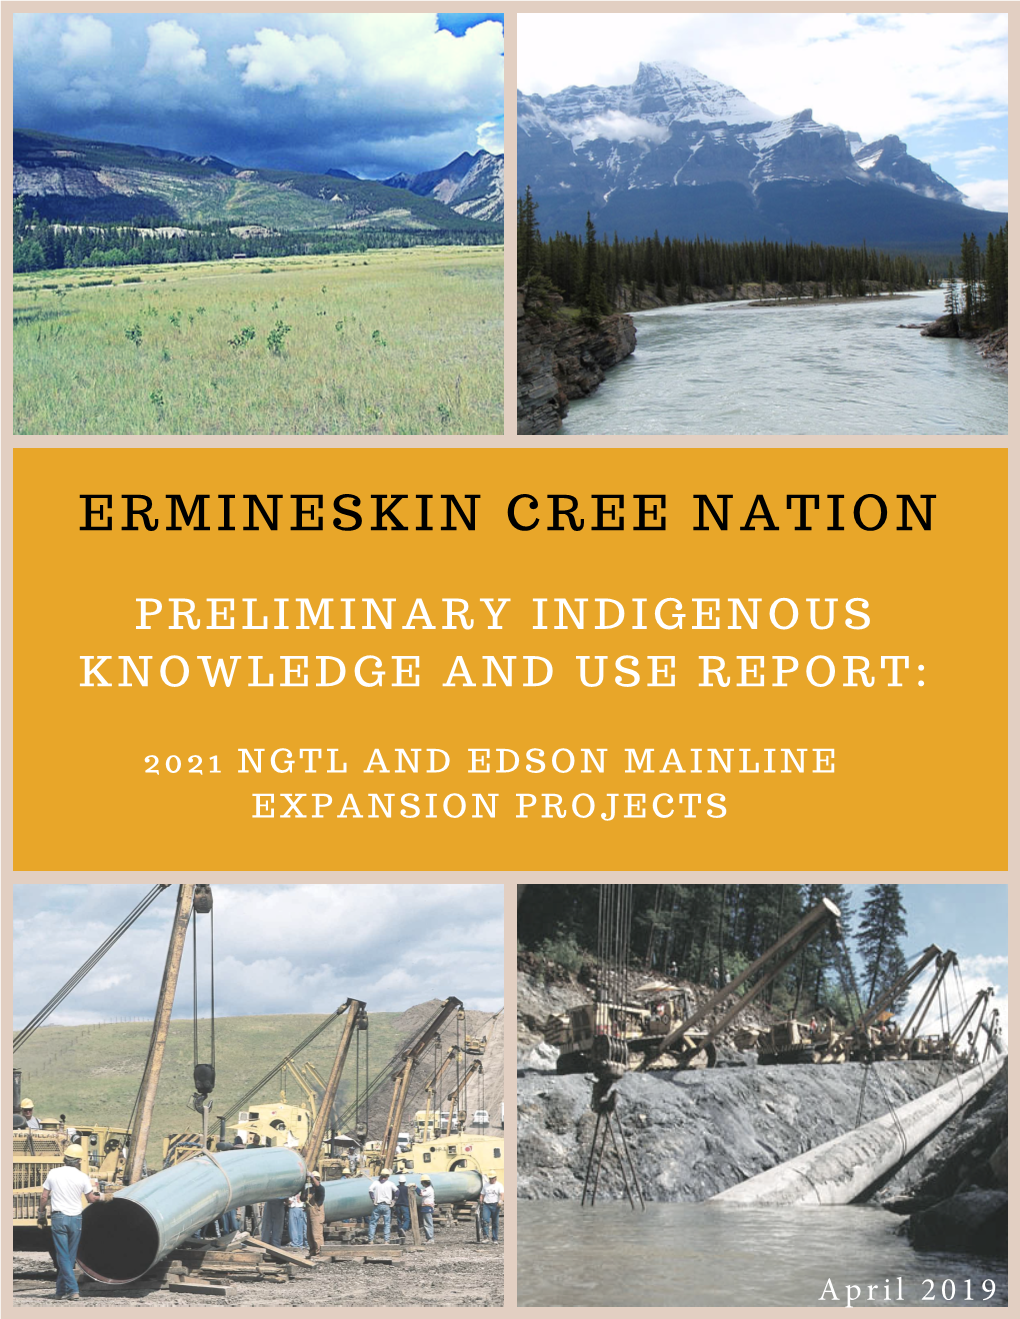 Ermineskin Cree Nation